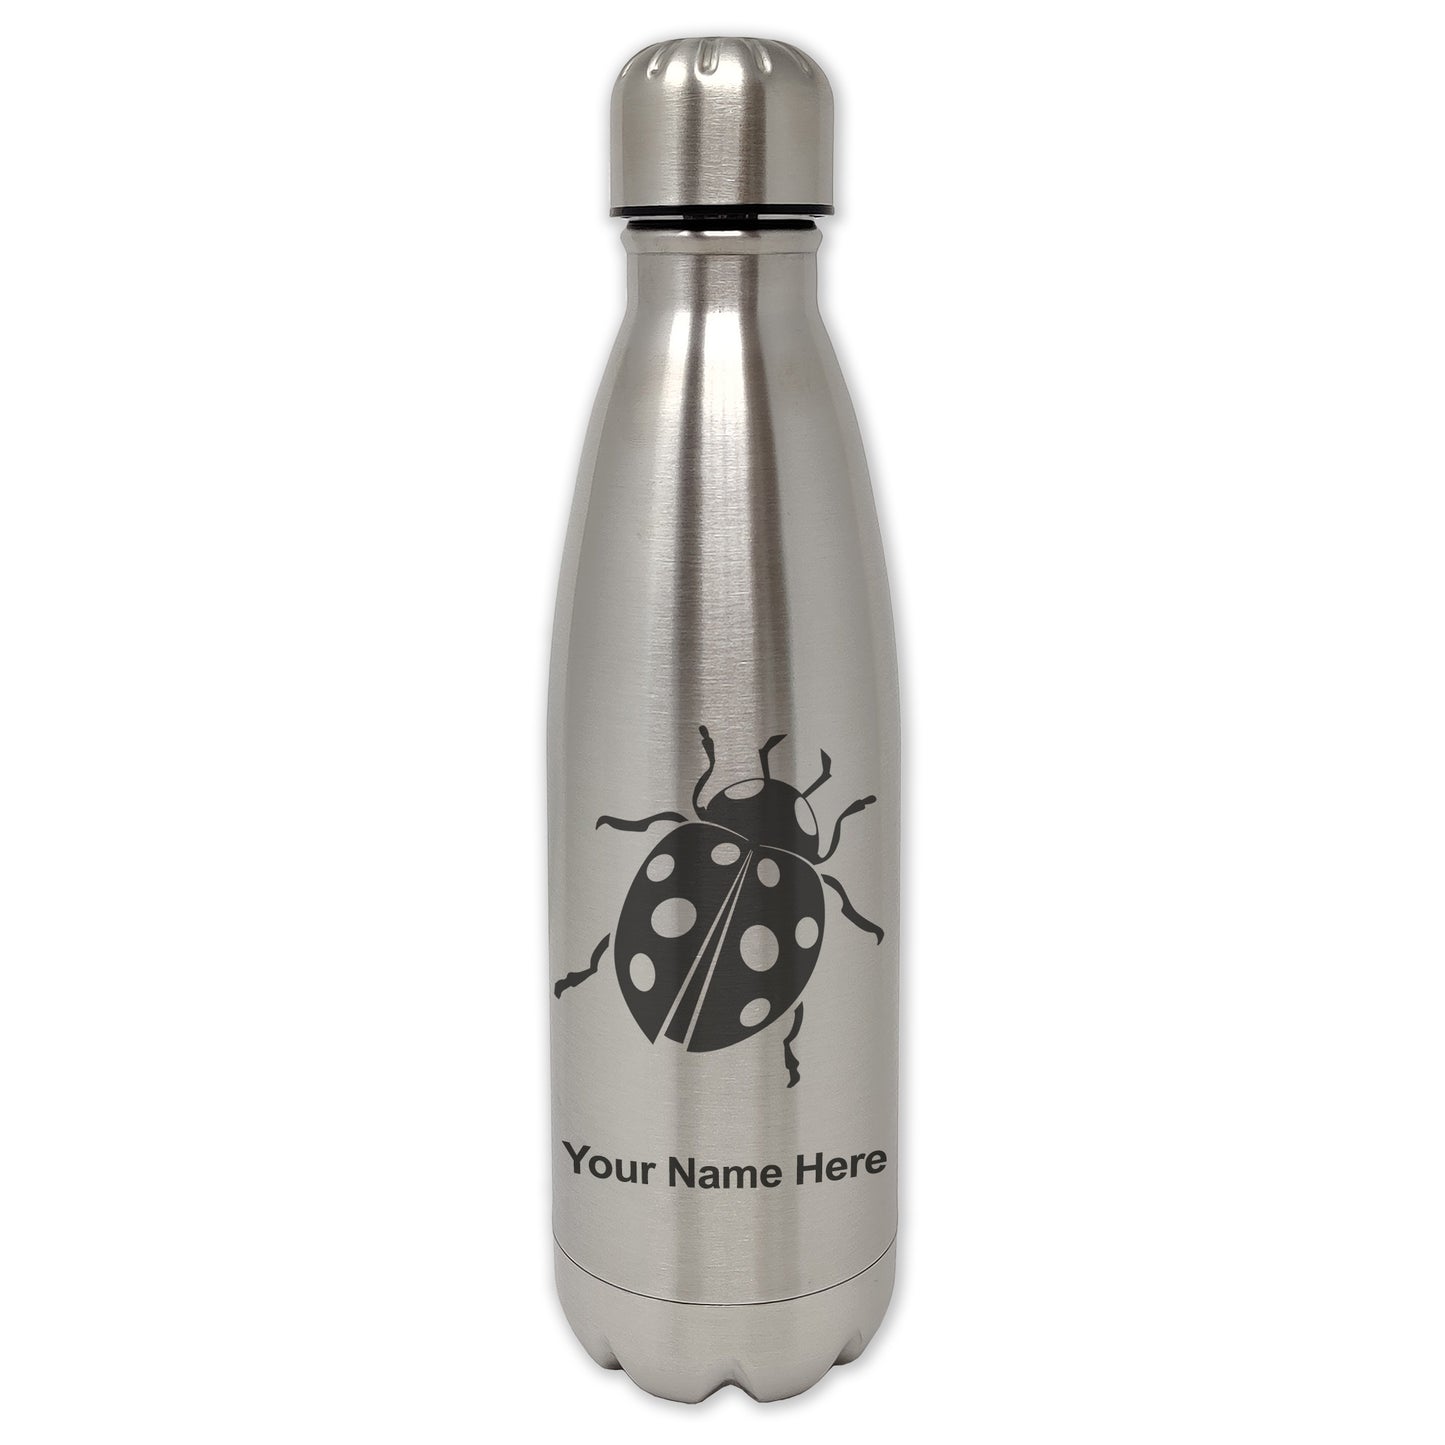 LaserGram Single Wall Water Bottle, Ladybug, Personalized Engraving Included